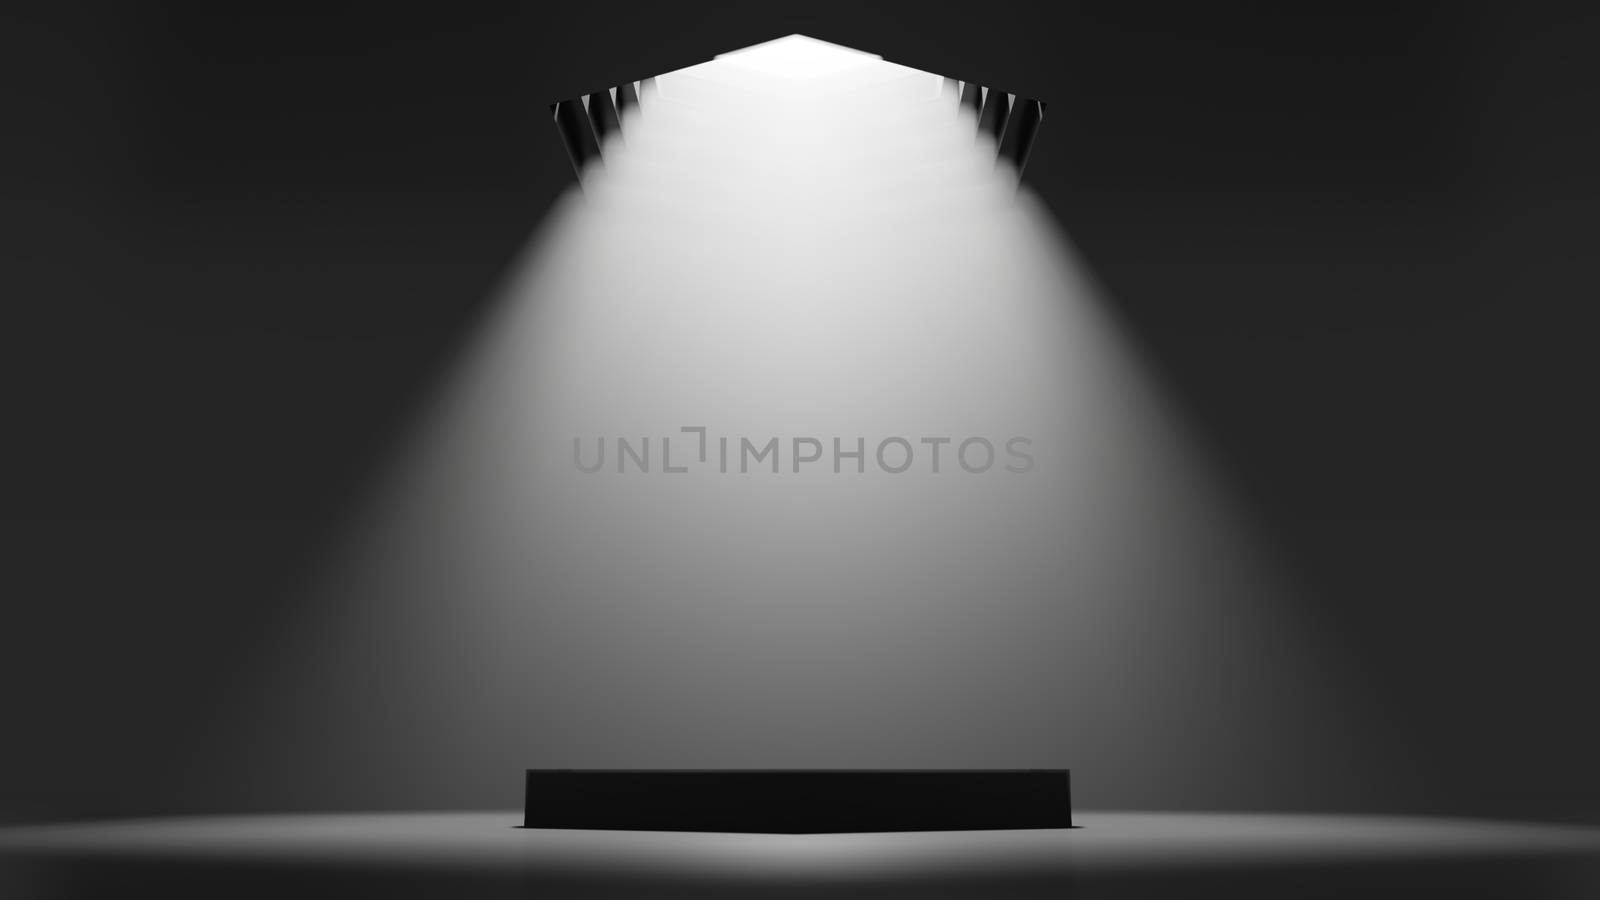 3D illustration. Showcase platform mockup, white ceiling light in empty dark room, cylinder podium. Dark abstract background